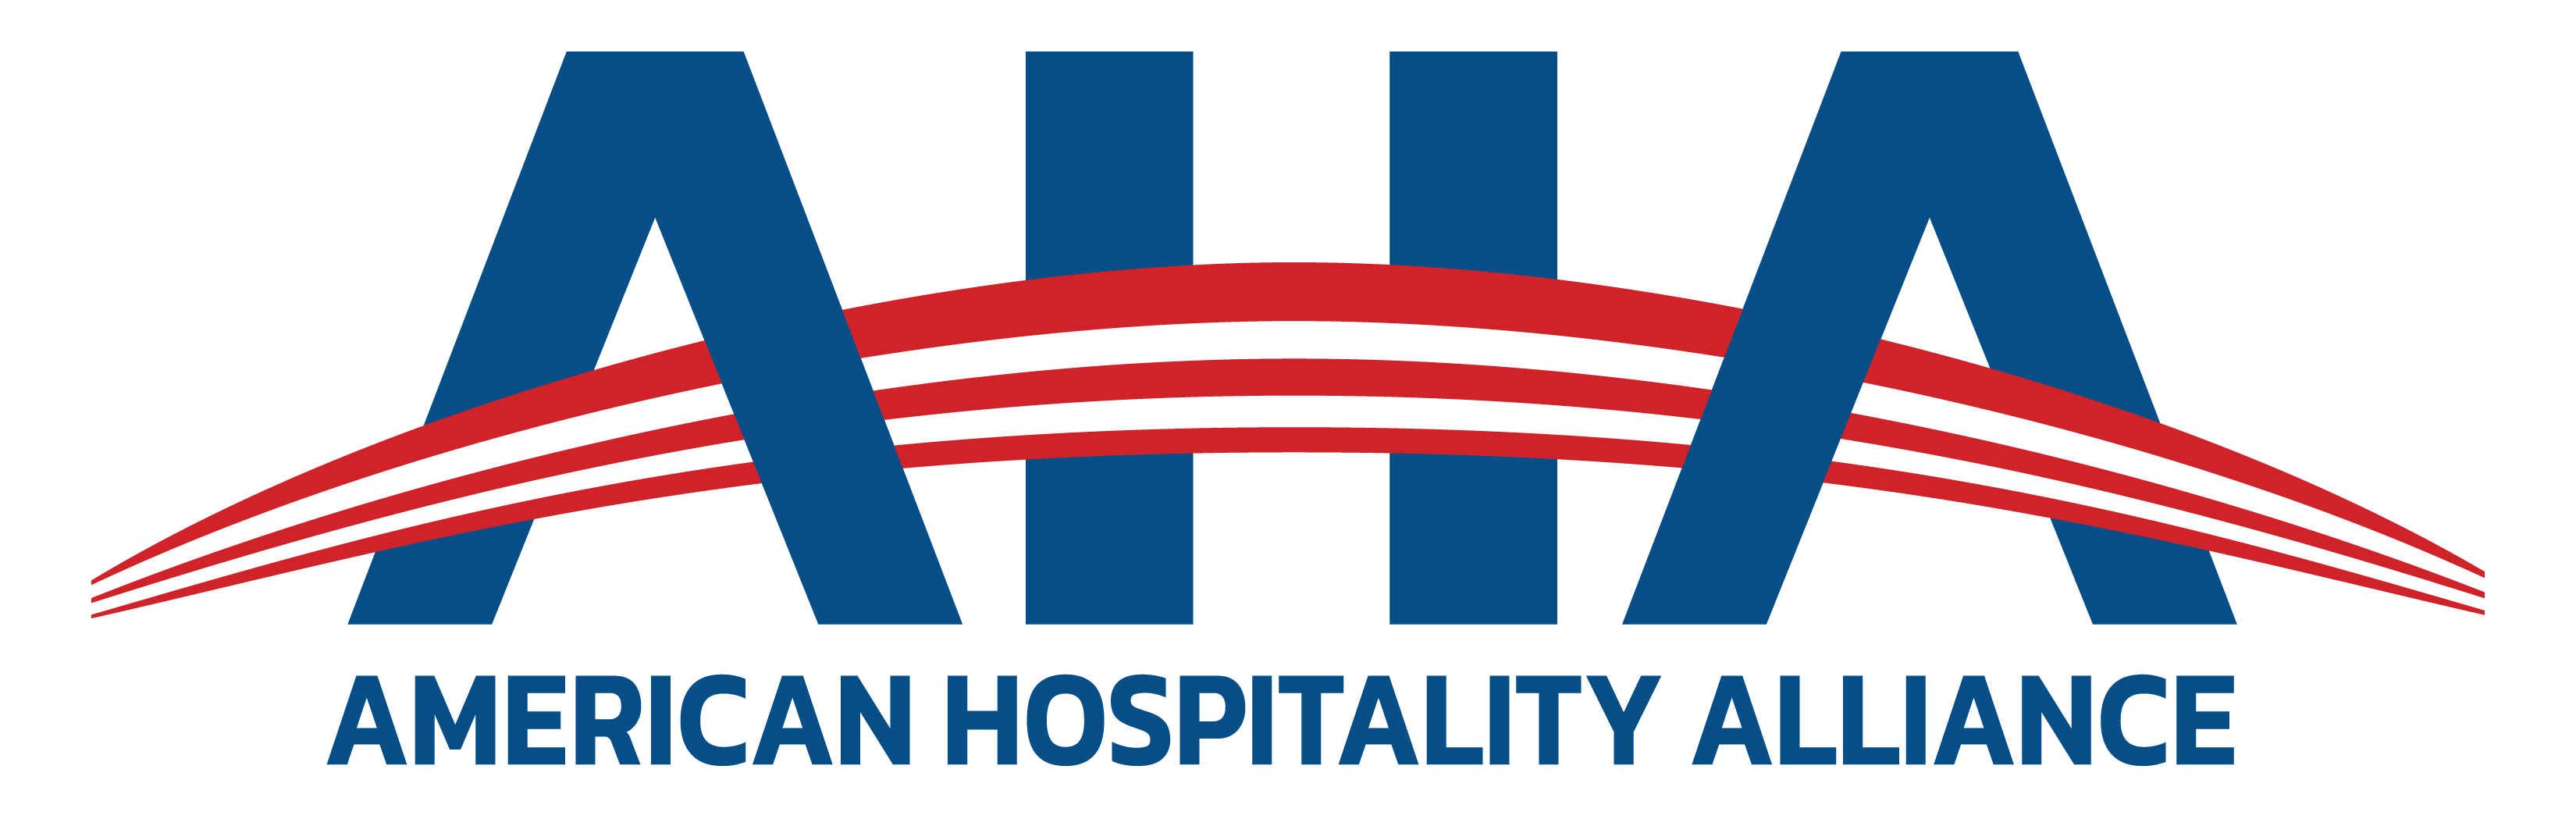 American Hospitality Alliance